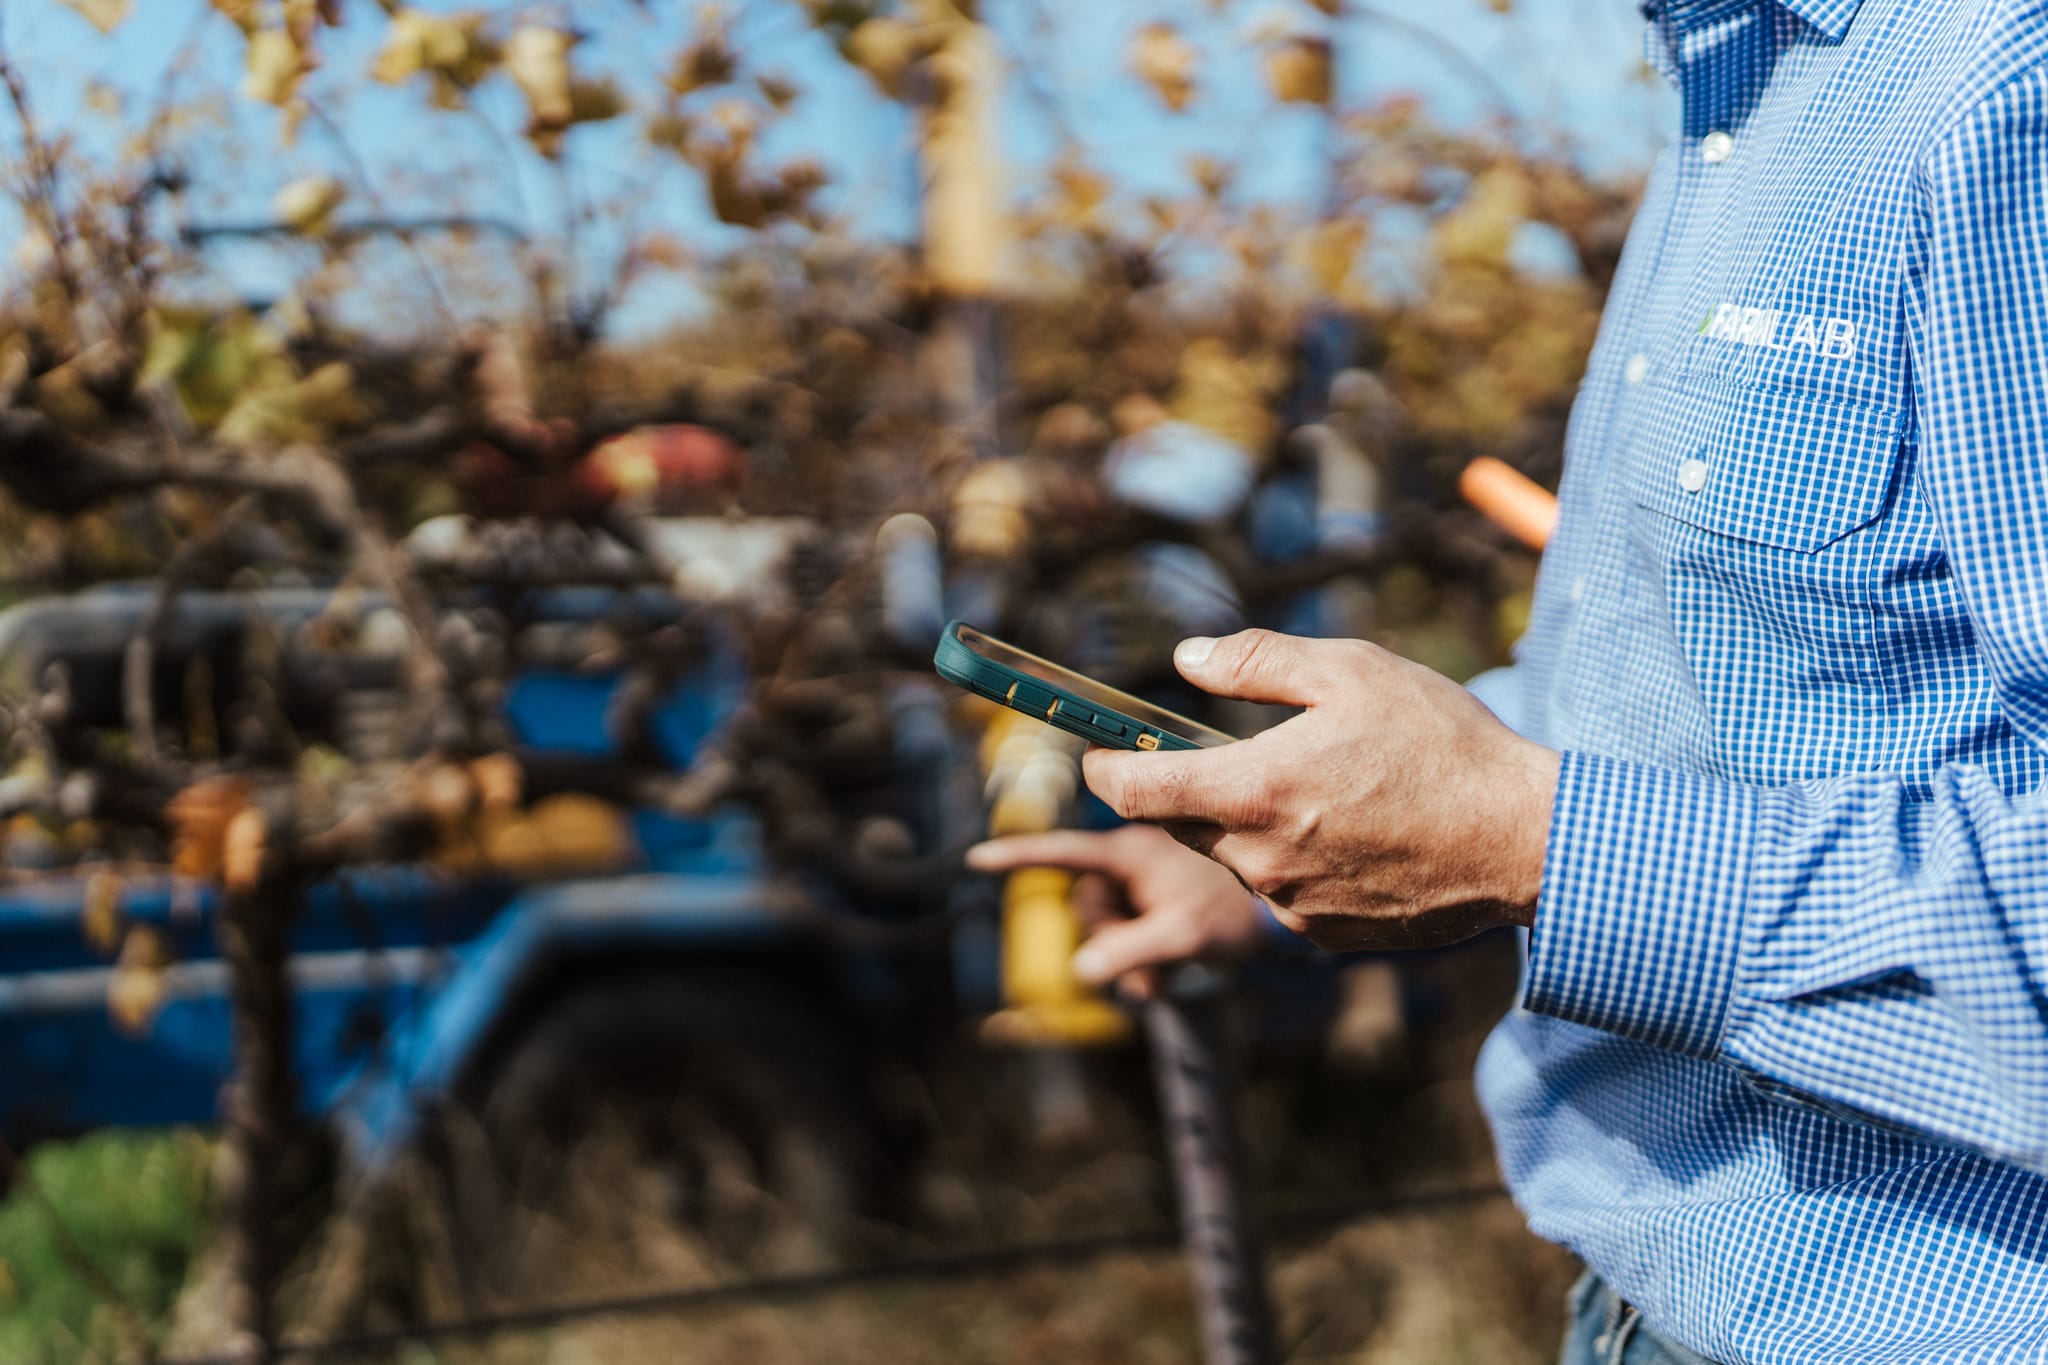 Man holding phone in vineyard 